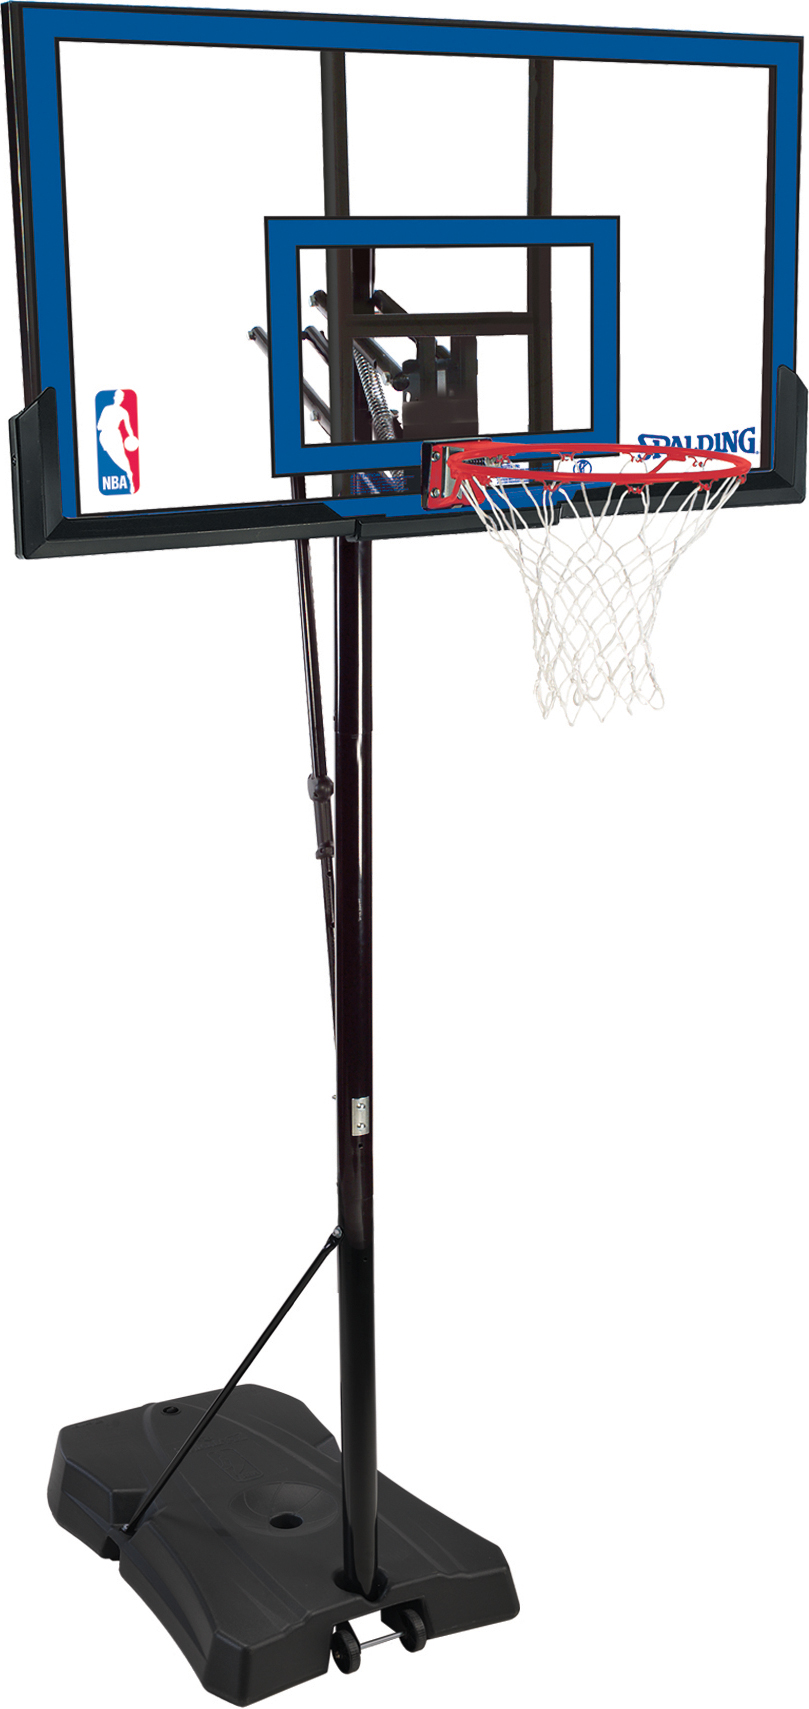 NBA Gametime Portable